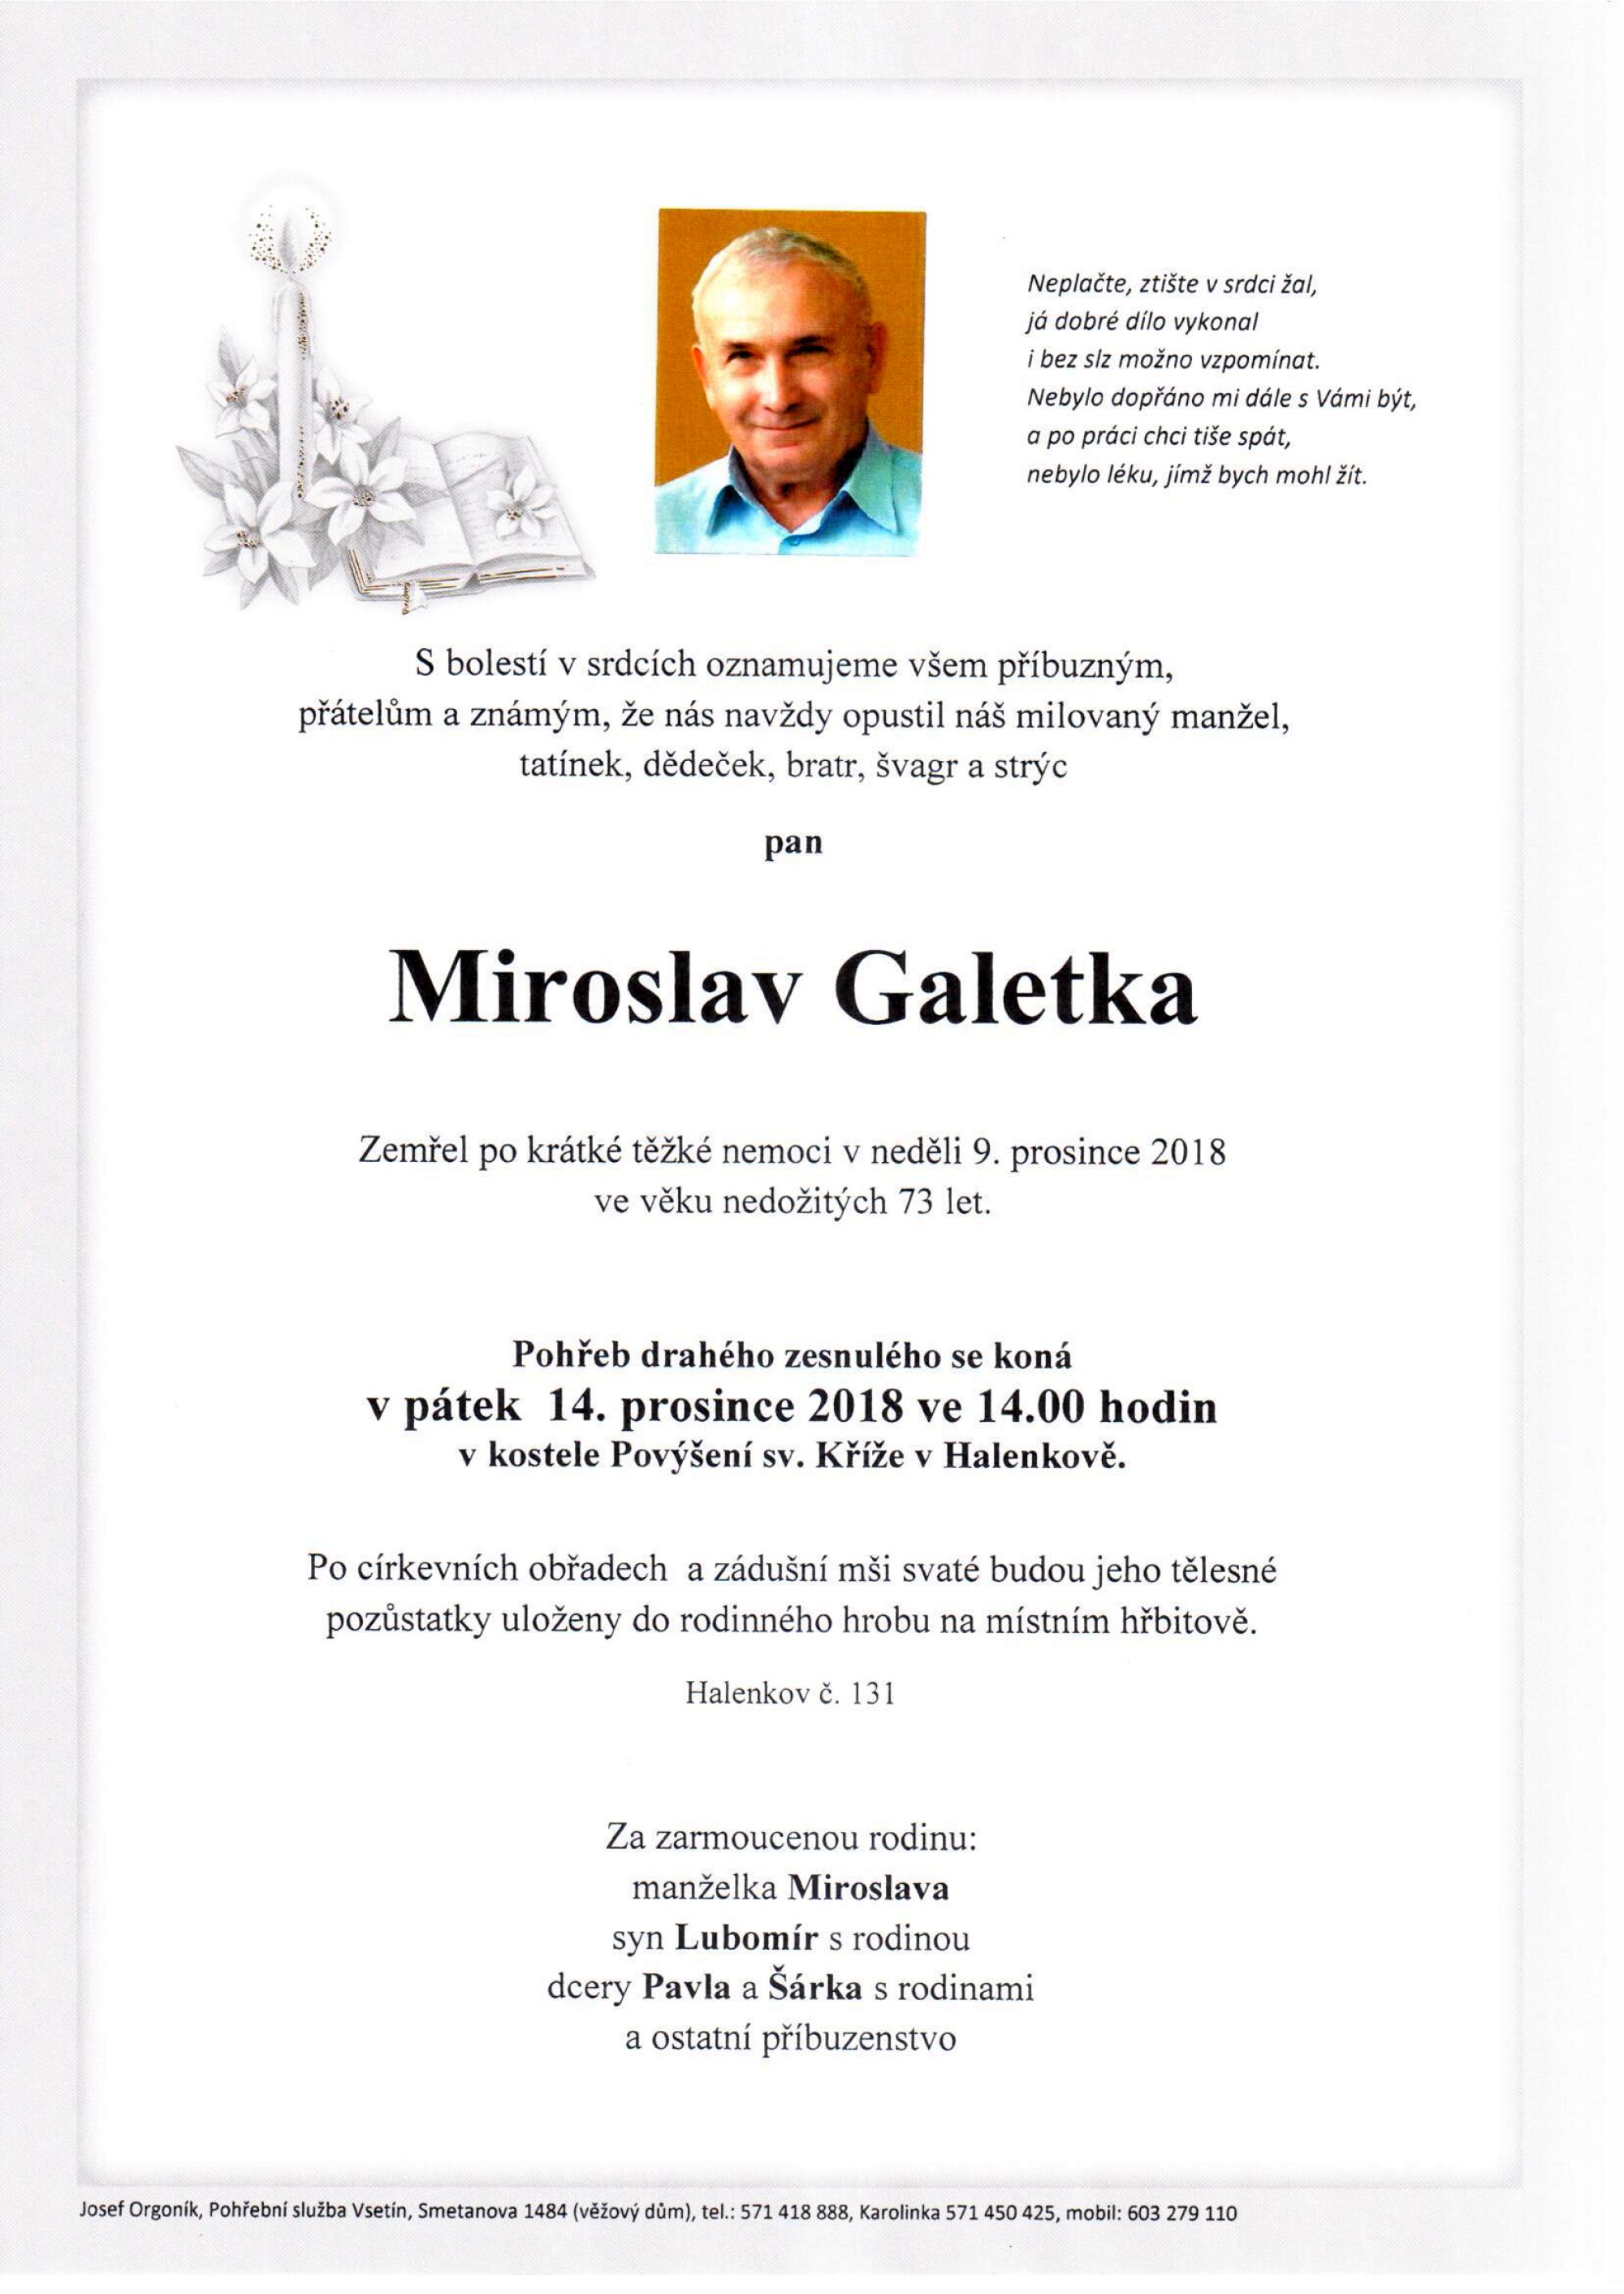 Miroslav Galetka